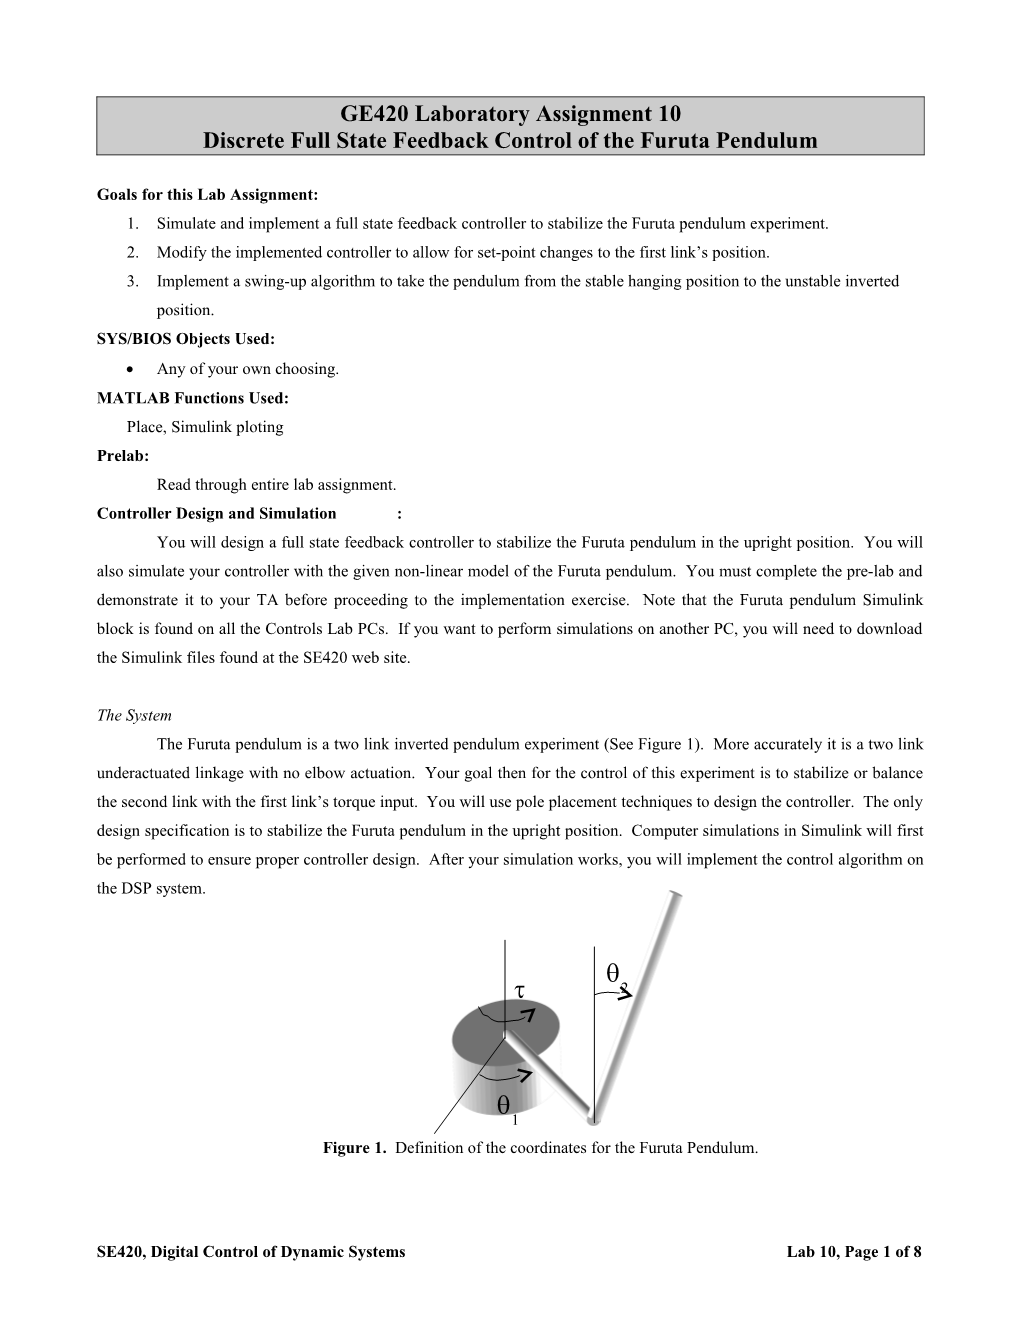 Discrete Fullstate Feedback Control of the Furuta Pendulum